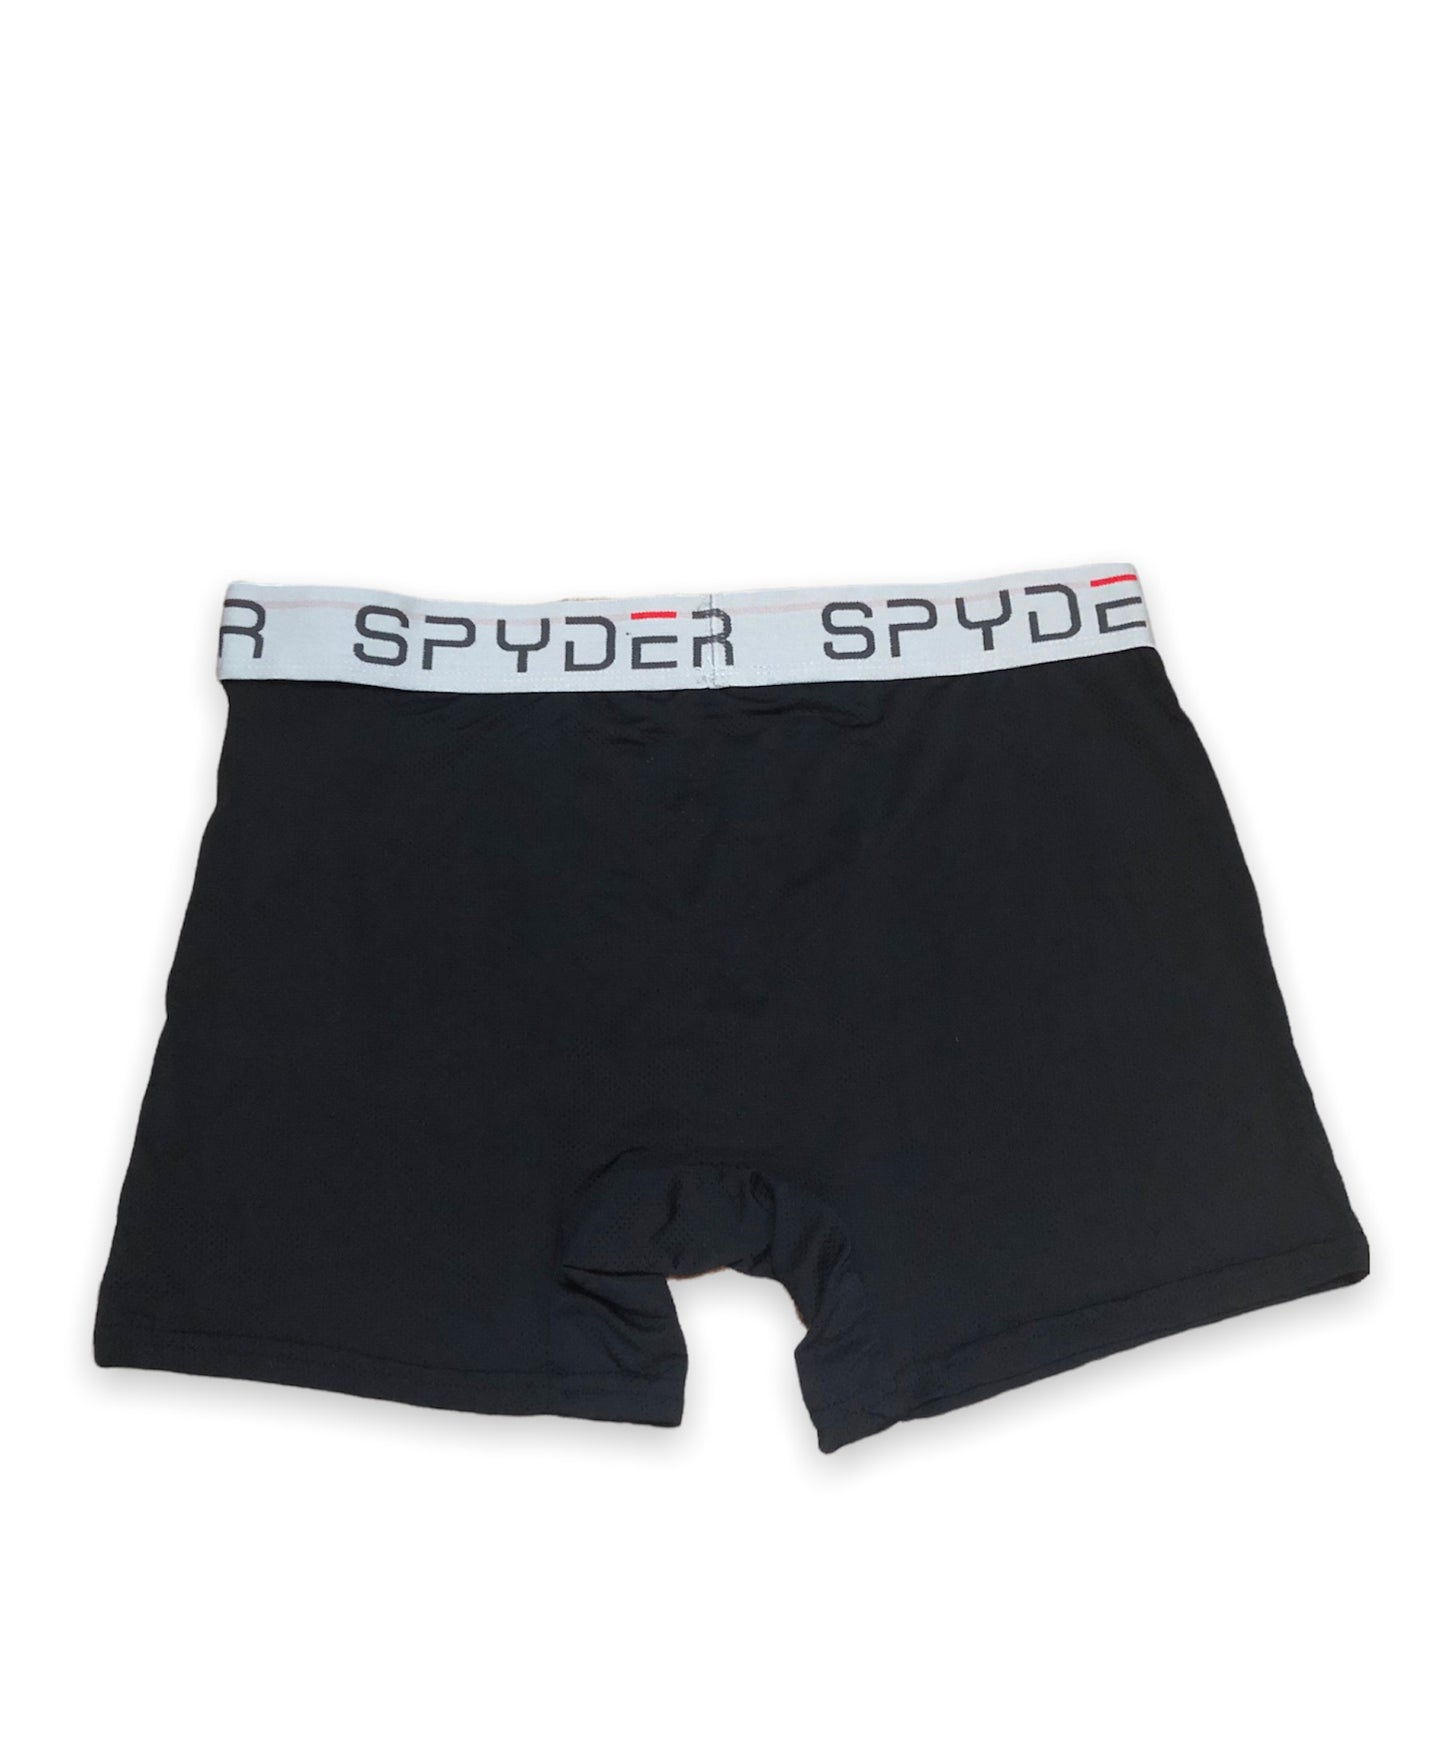 Spyder Men's Boxer Briefs (NWOT)